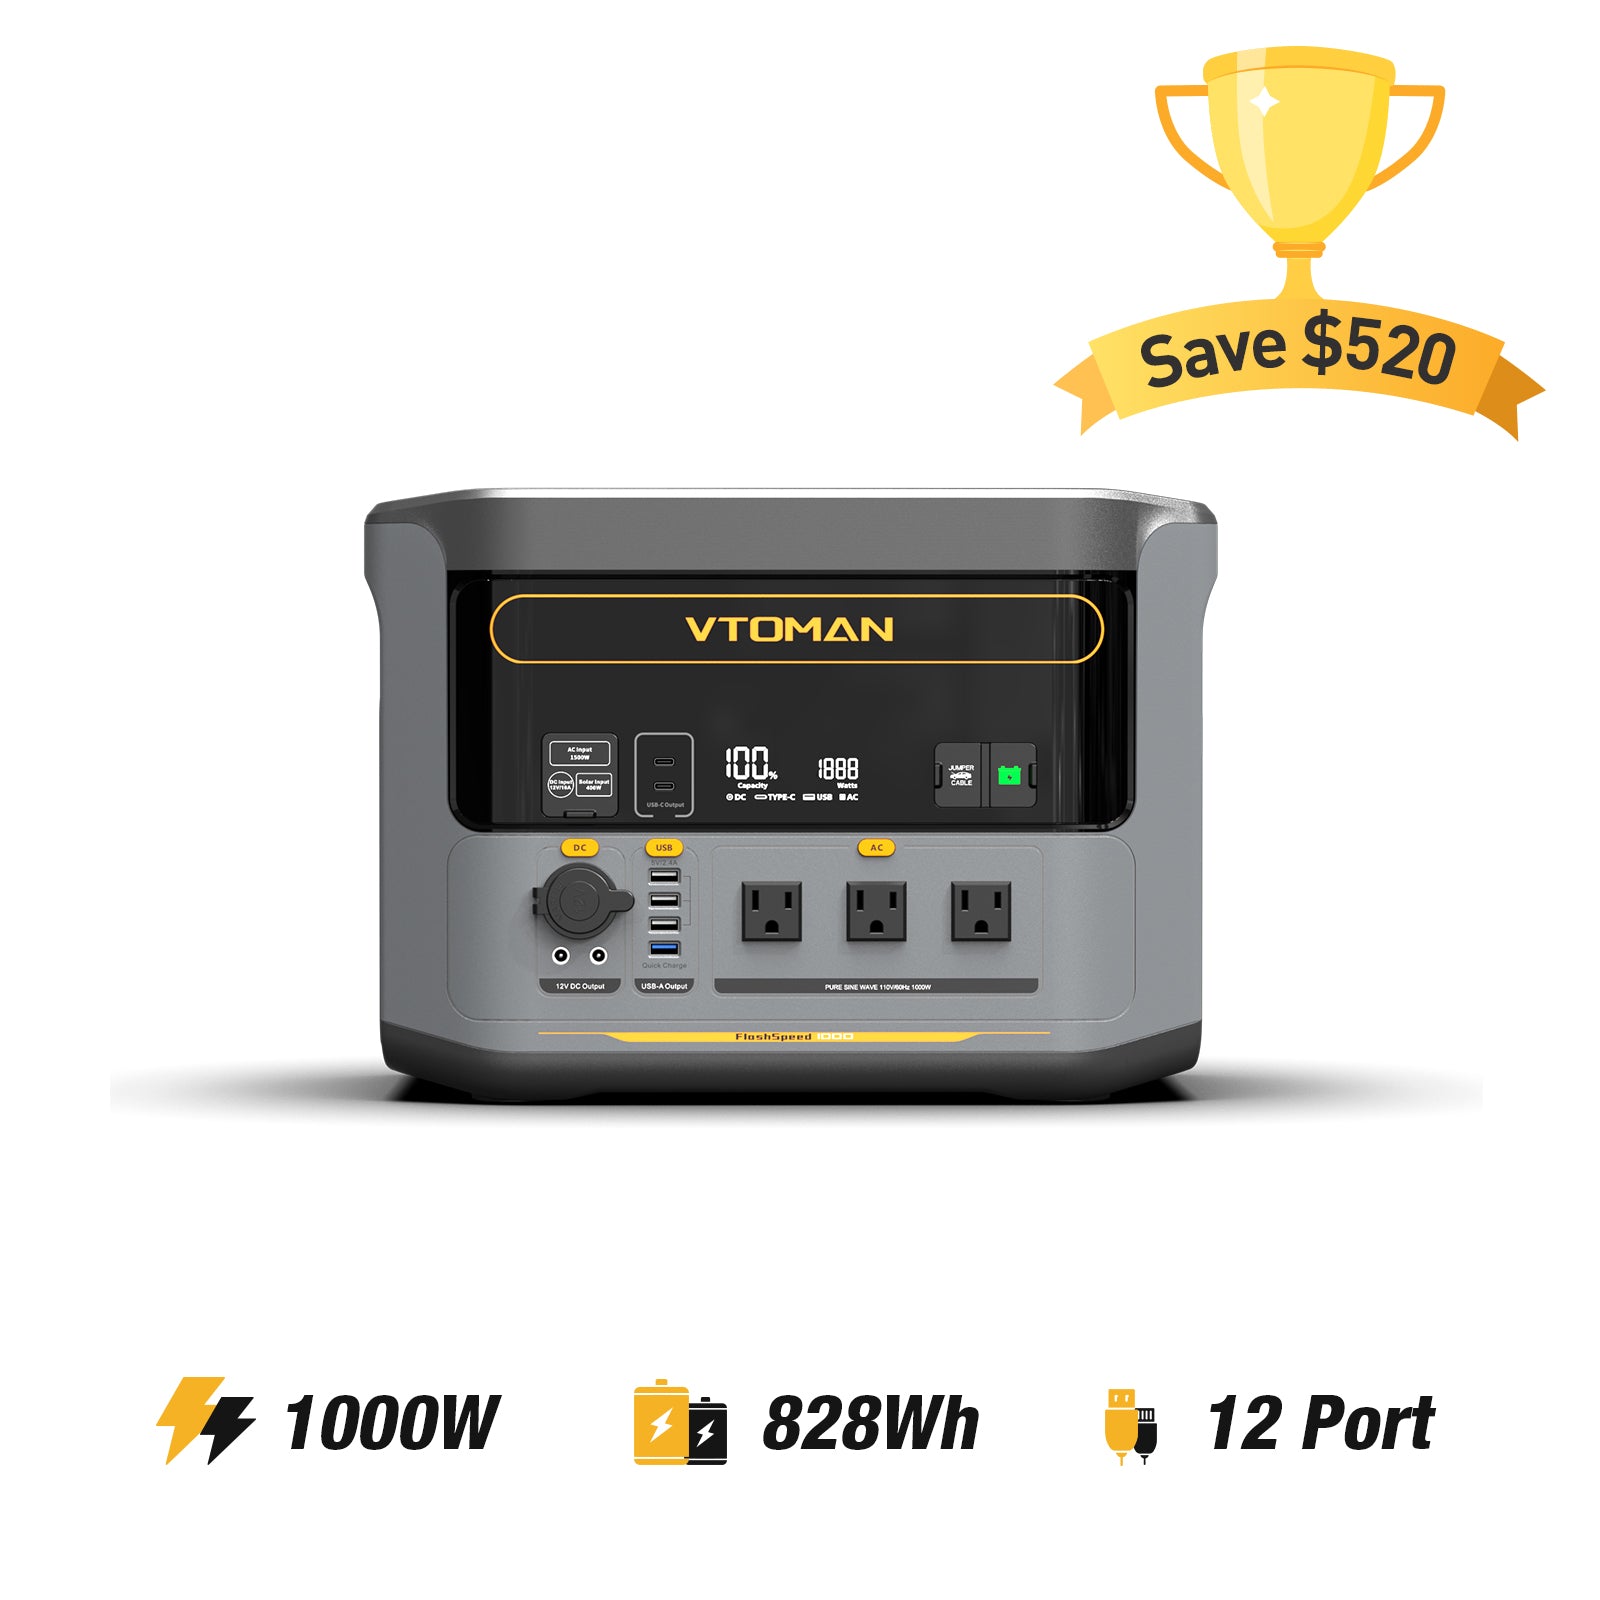 VTOMAN FlashSpeed 1000 Power Station 828Wh | 1000W